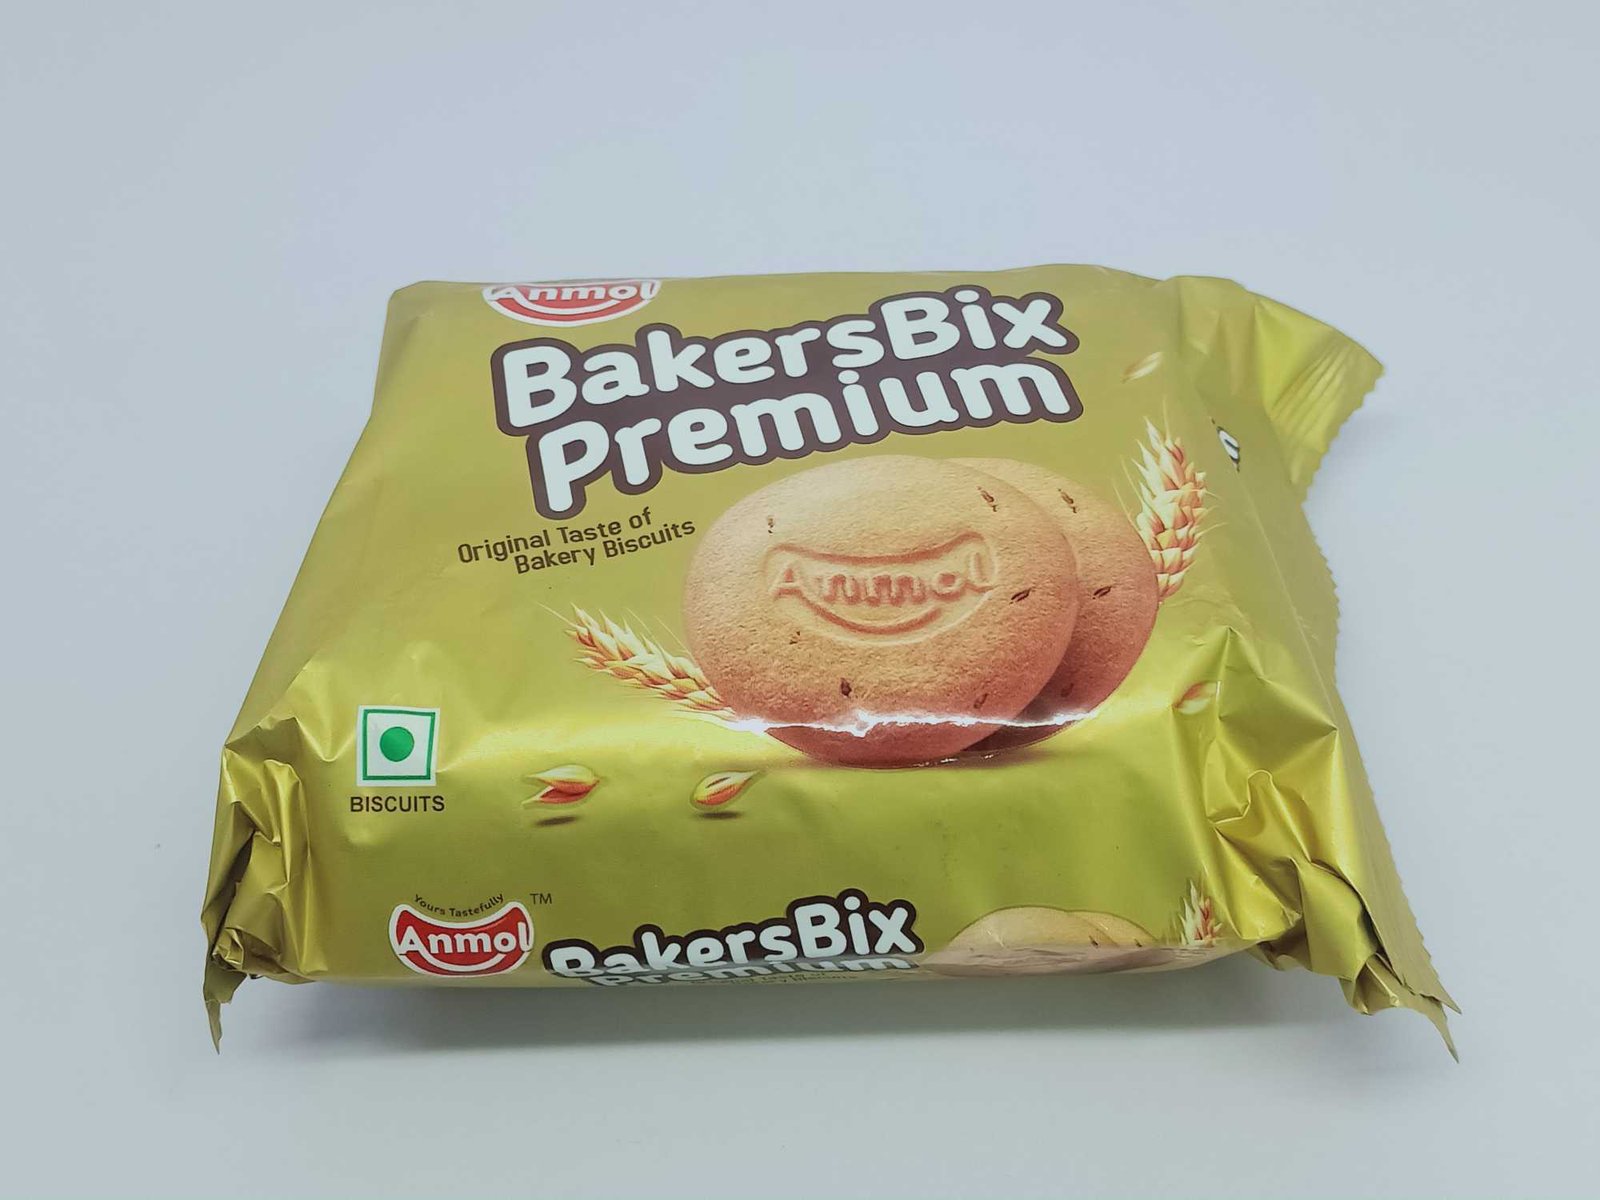 Anmol Bakers Bix Premium Original Taste of Bakery Biscuits, 180 gram